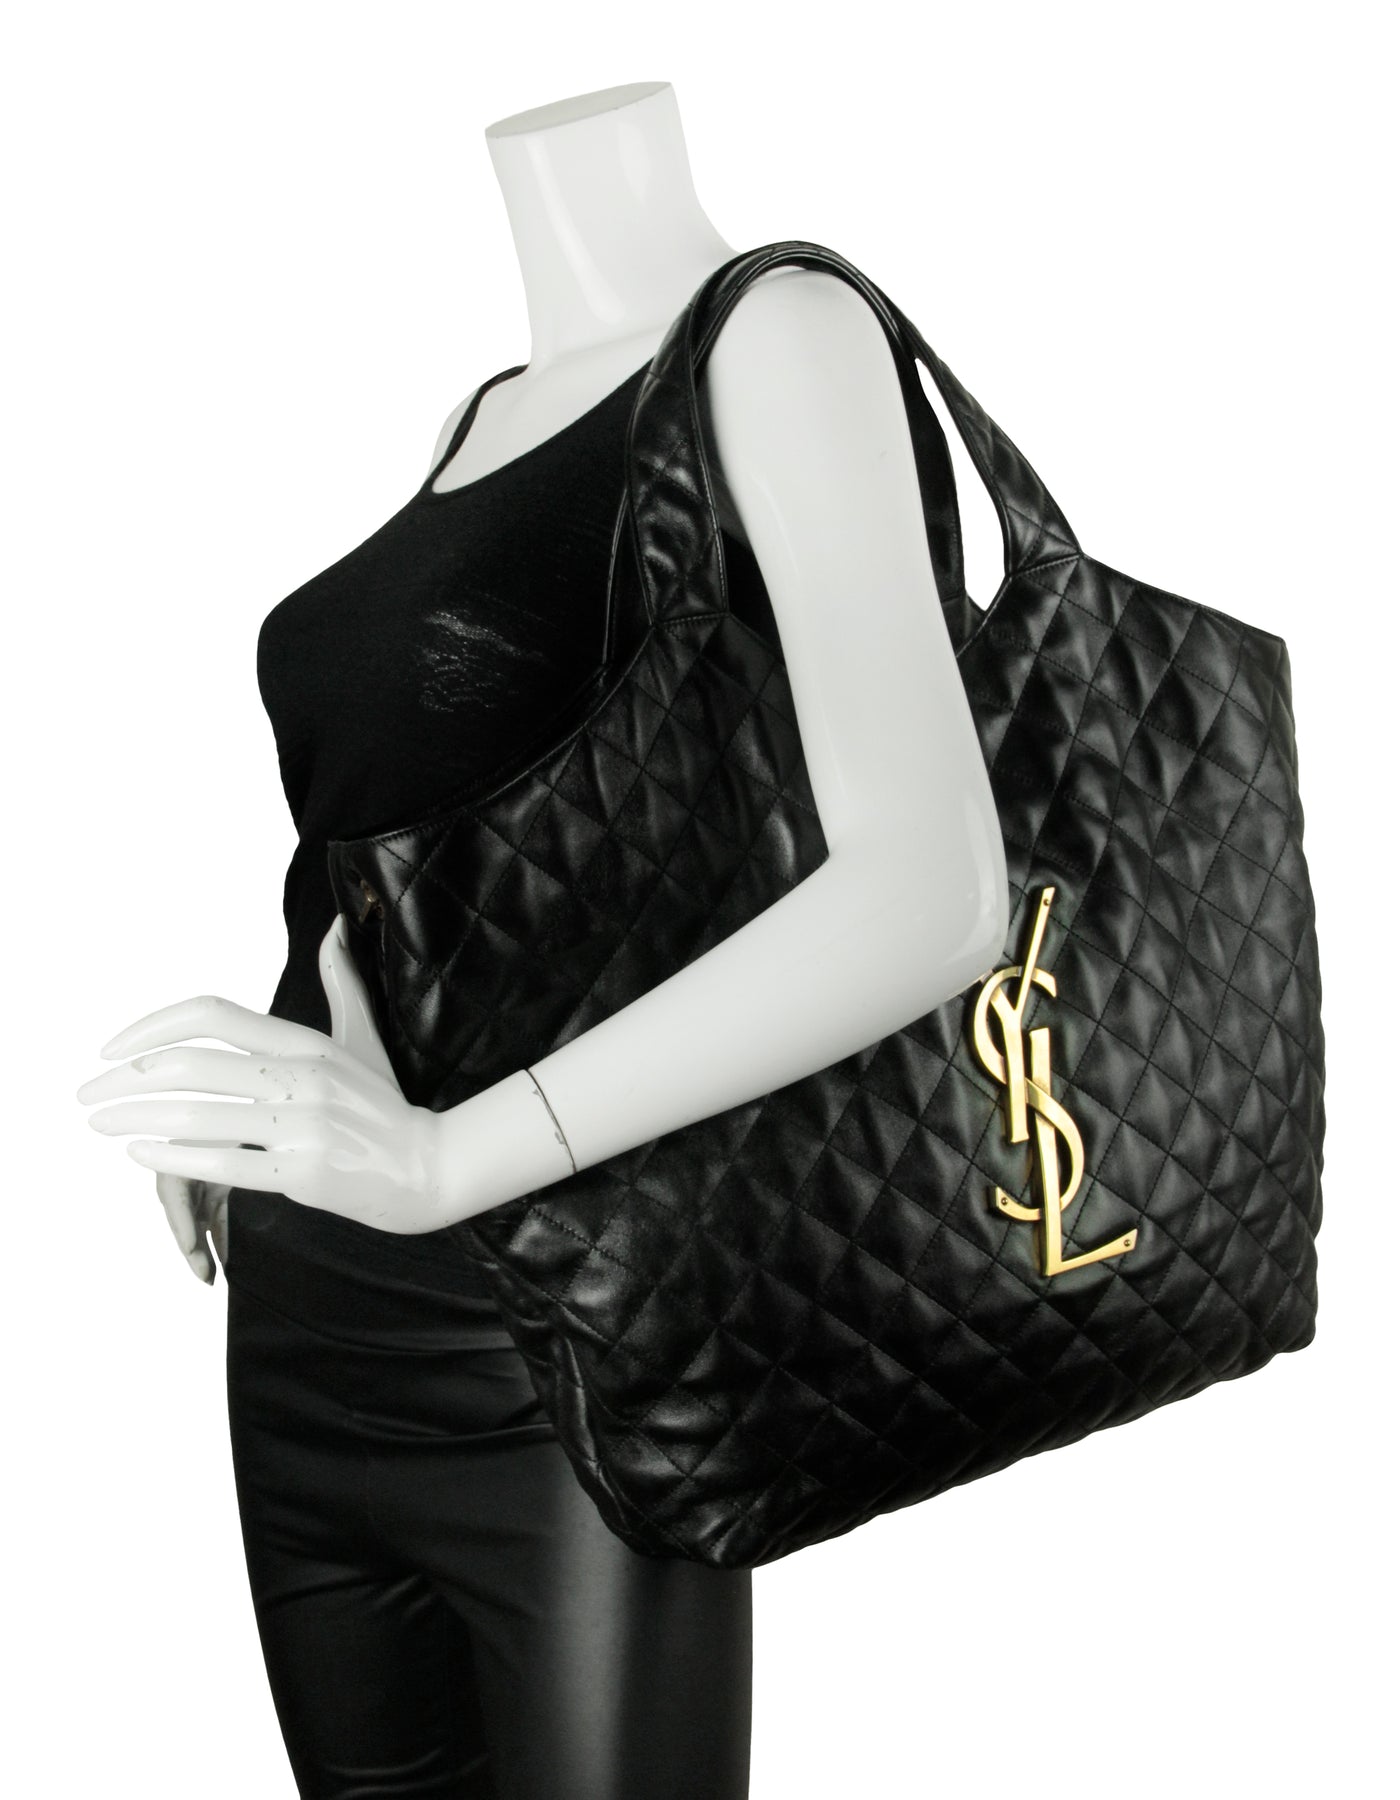 AUTHENTIC Saint Laurent ICARE Maxi Shopping Tote Bag Black